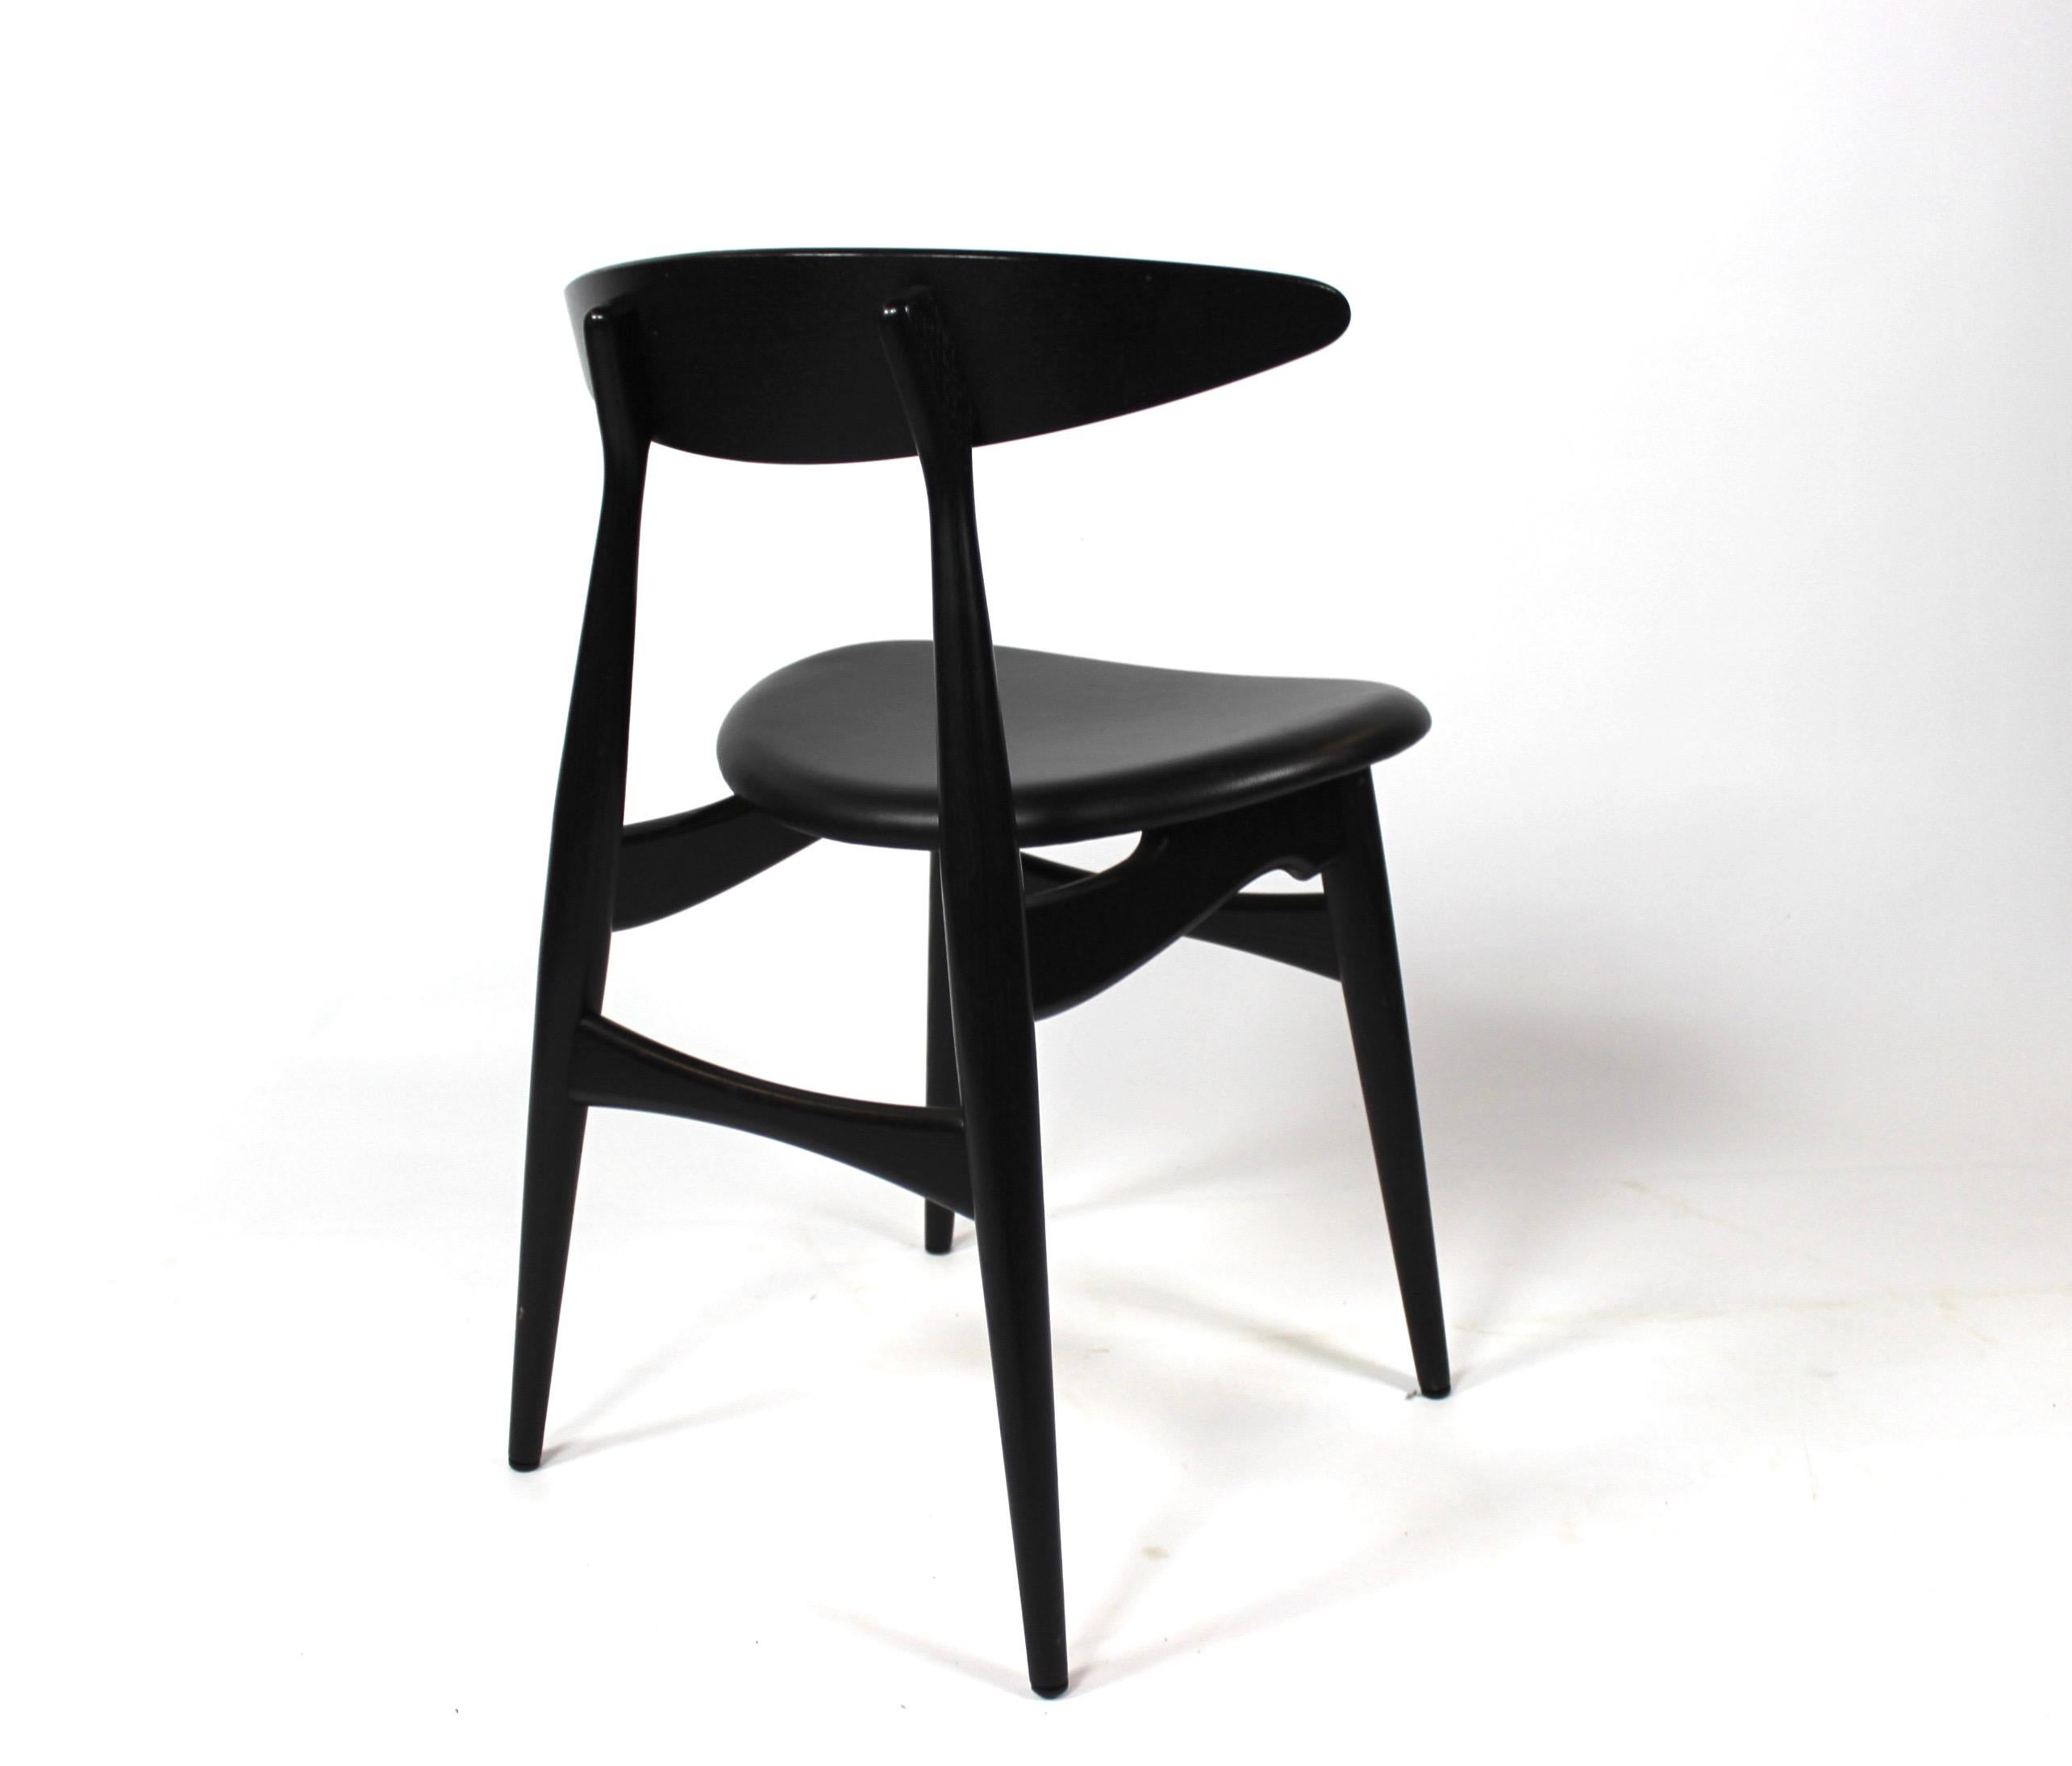 Oak Set of Four Dining Room Chairs, Model CH33T, by Hans J. Wegner, 2012